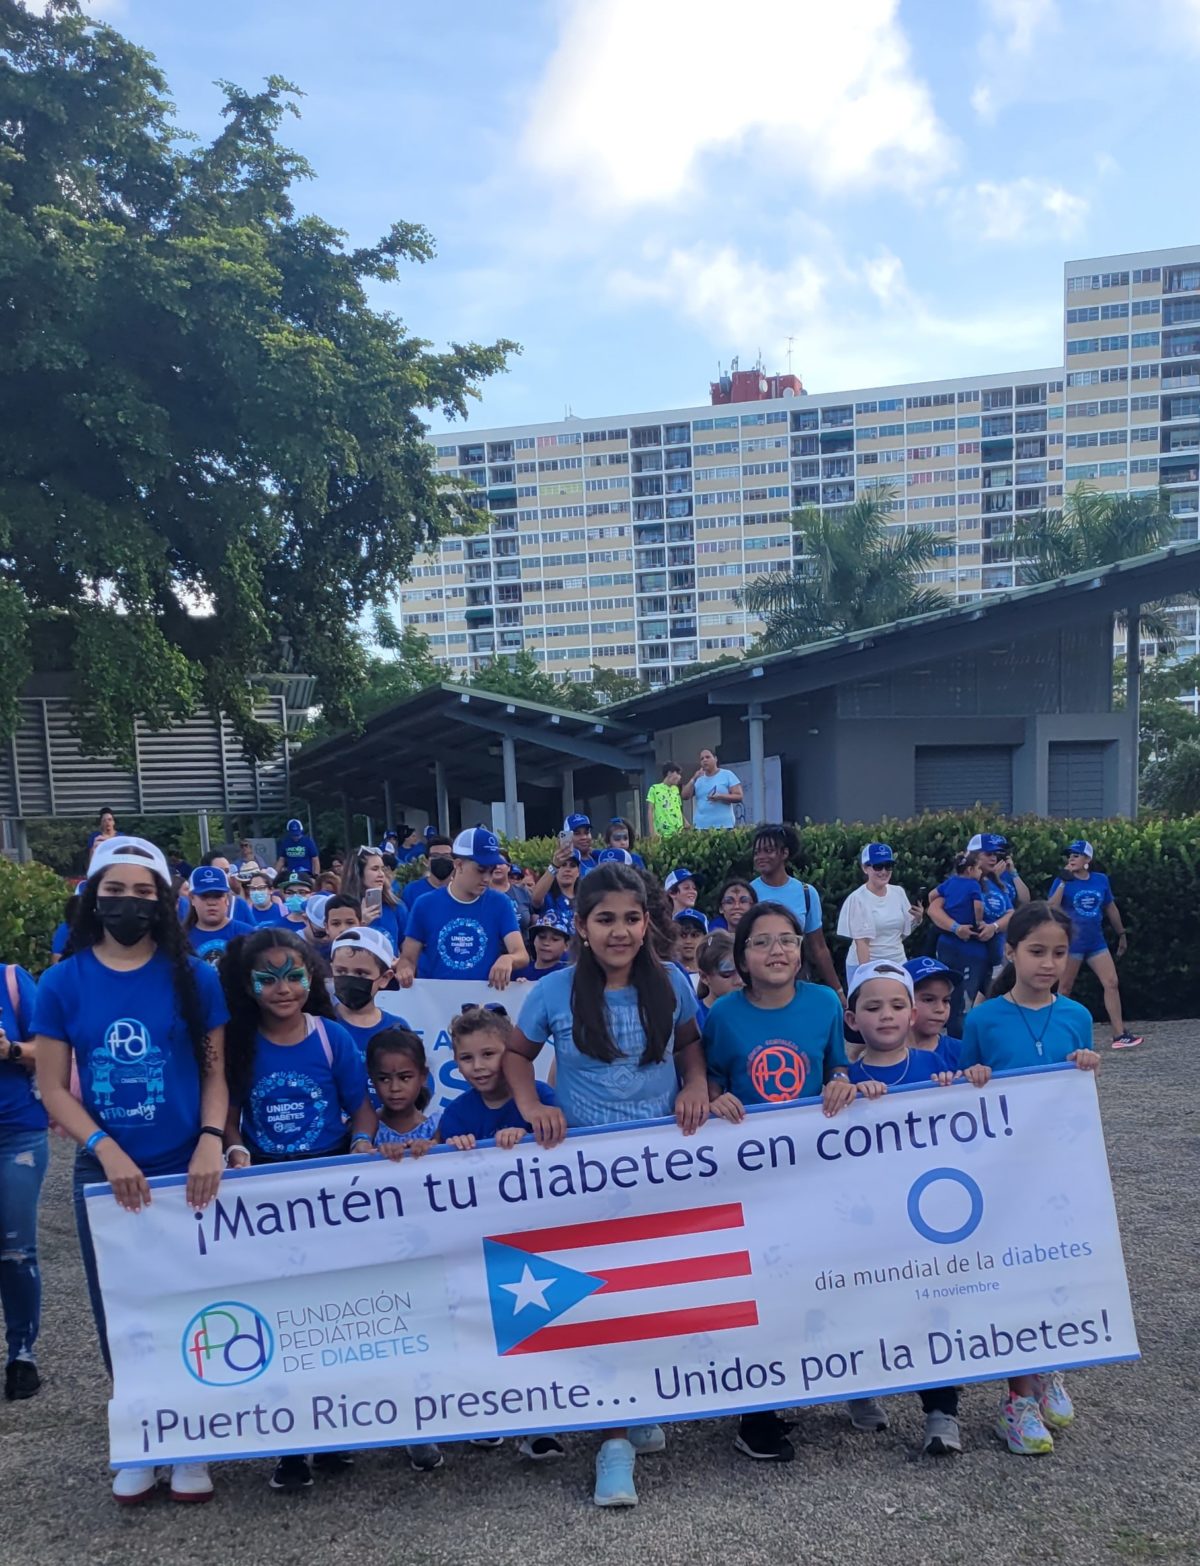 Children from Fundación Pediátrica de Diabetes